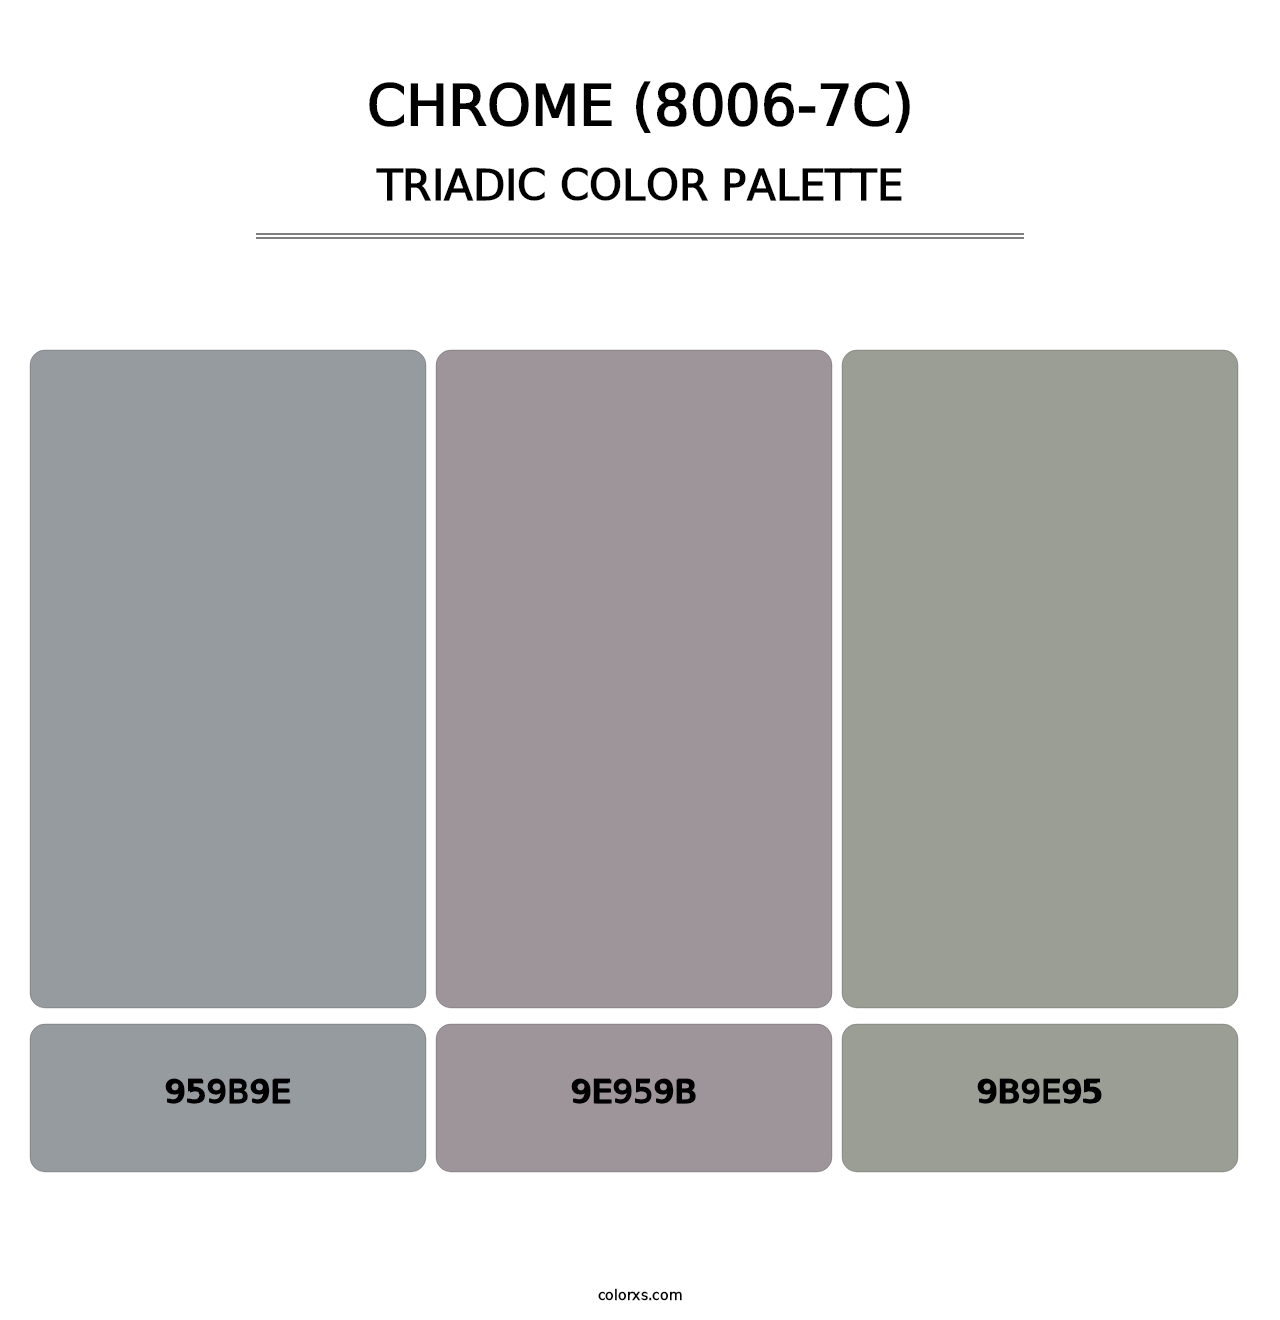 Chrome (8006-7C) - Triadic Color Palette